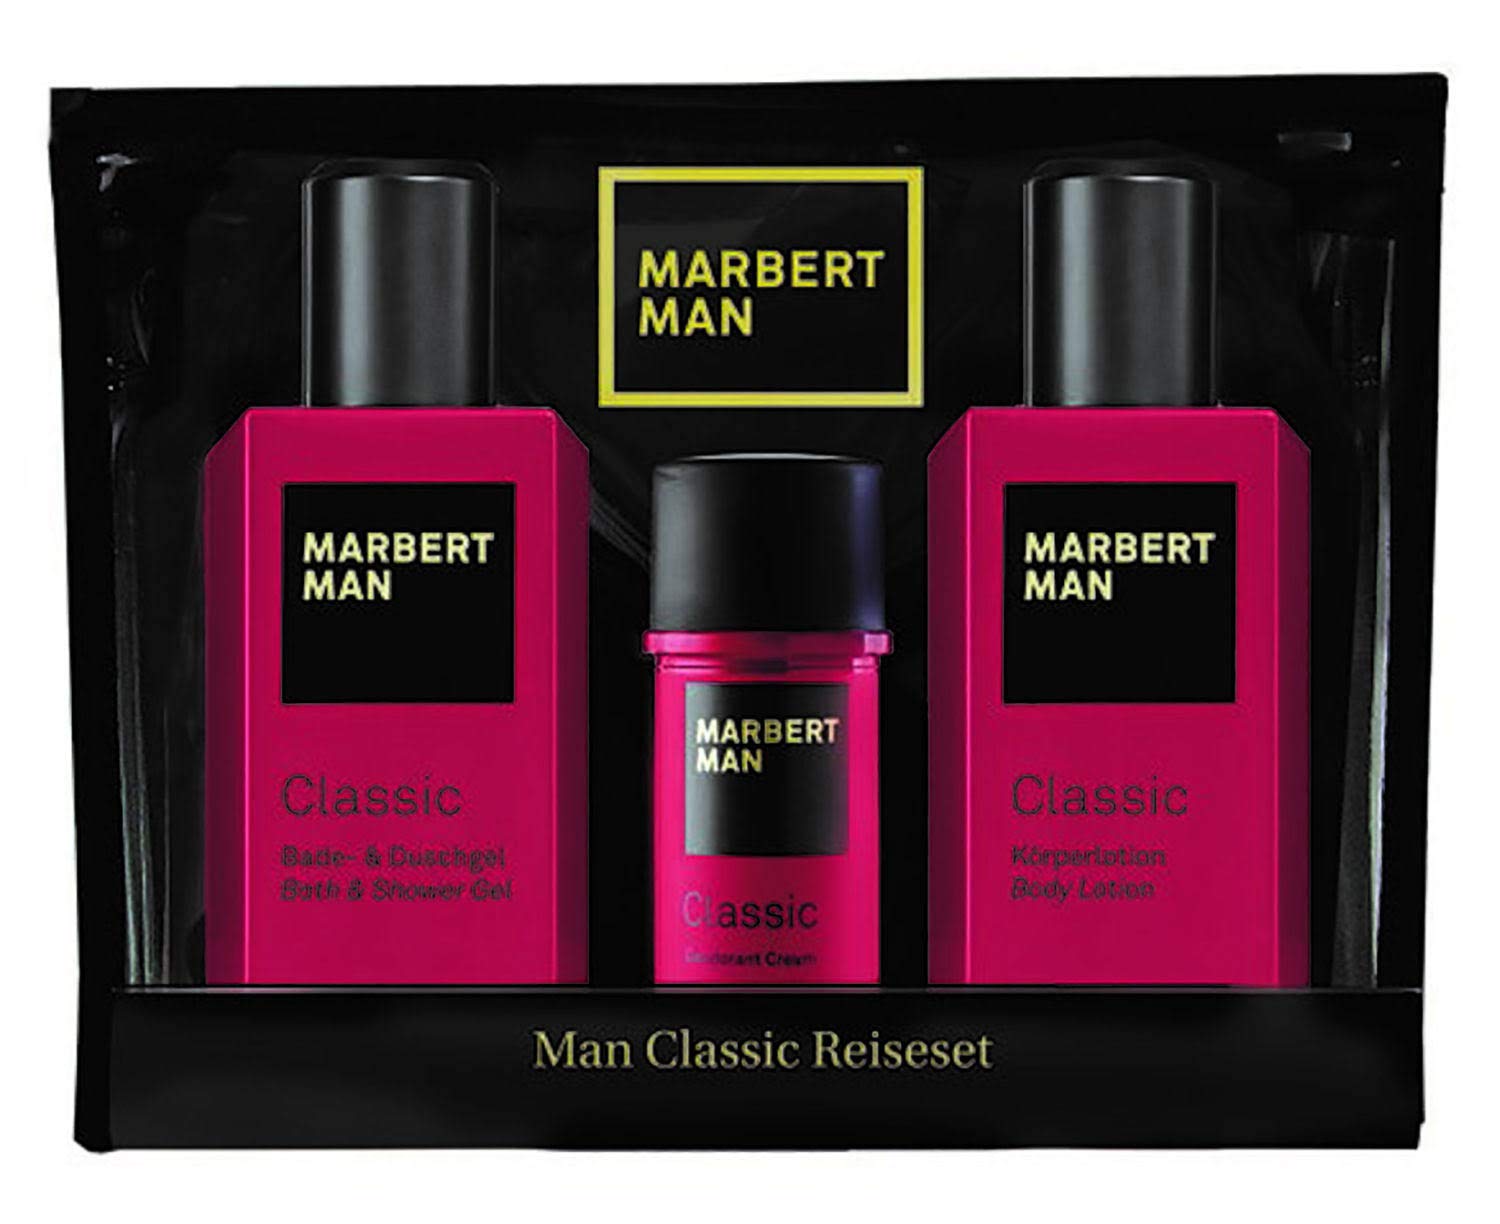 Marbert Man Classic > Man Classic Travel Set 3 Items in a set